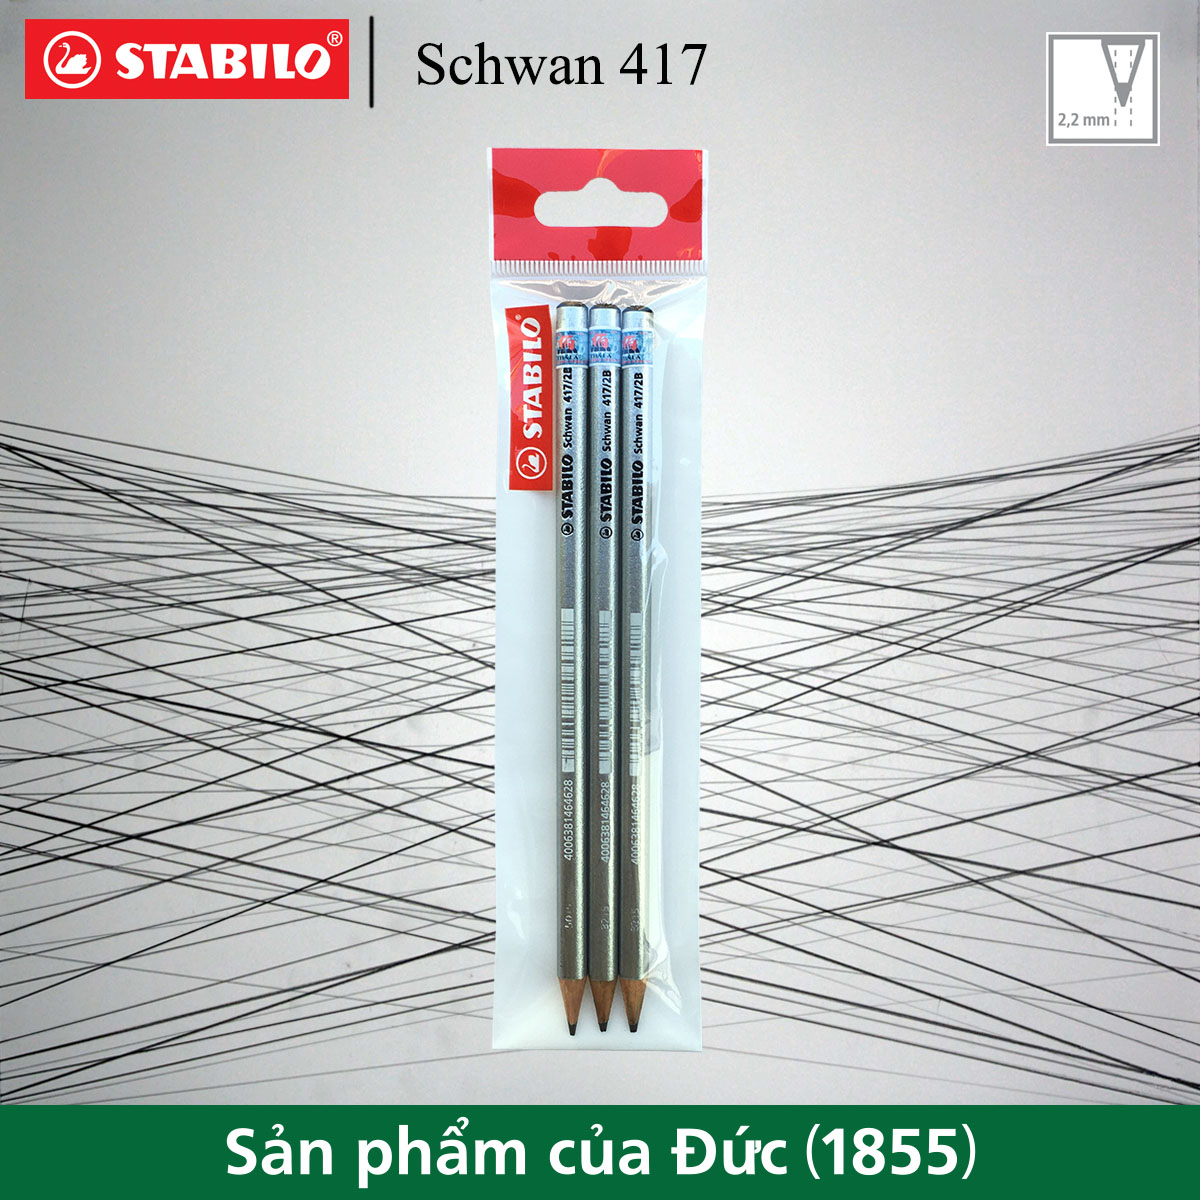 Bộ 3 bút chì gỗ STABILO Schwan 417 màu bạc